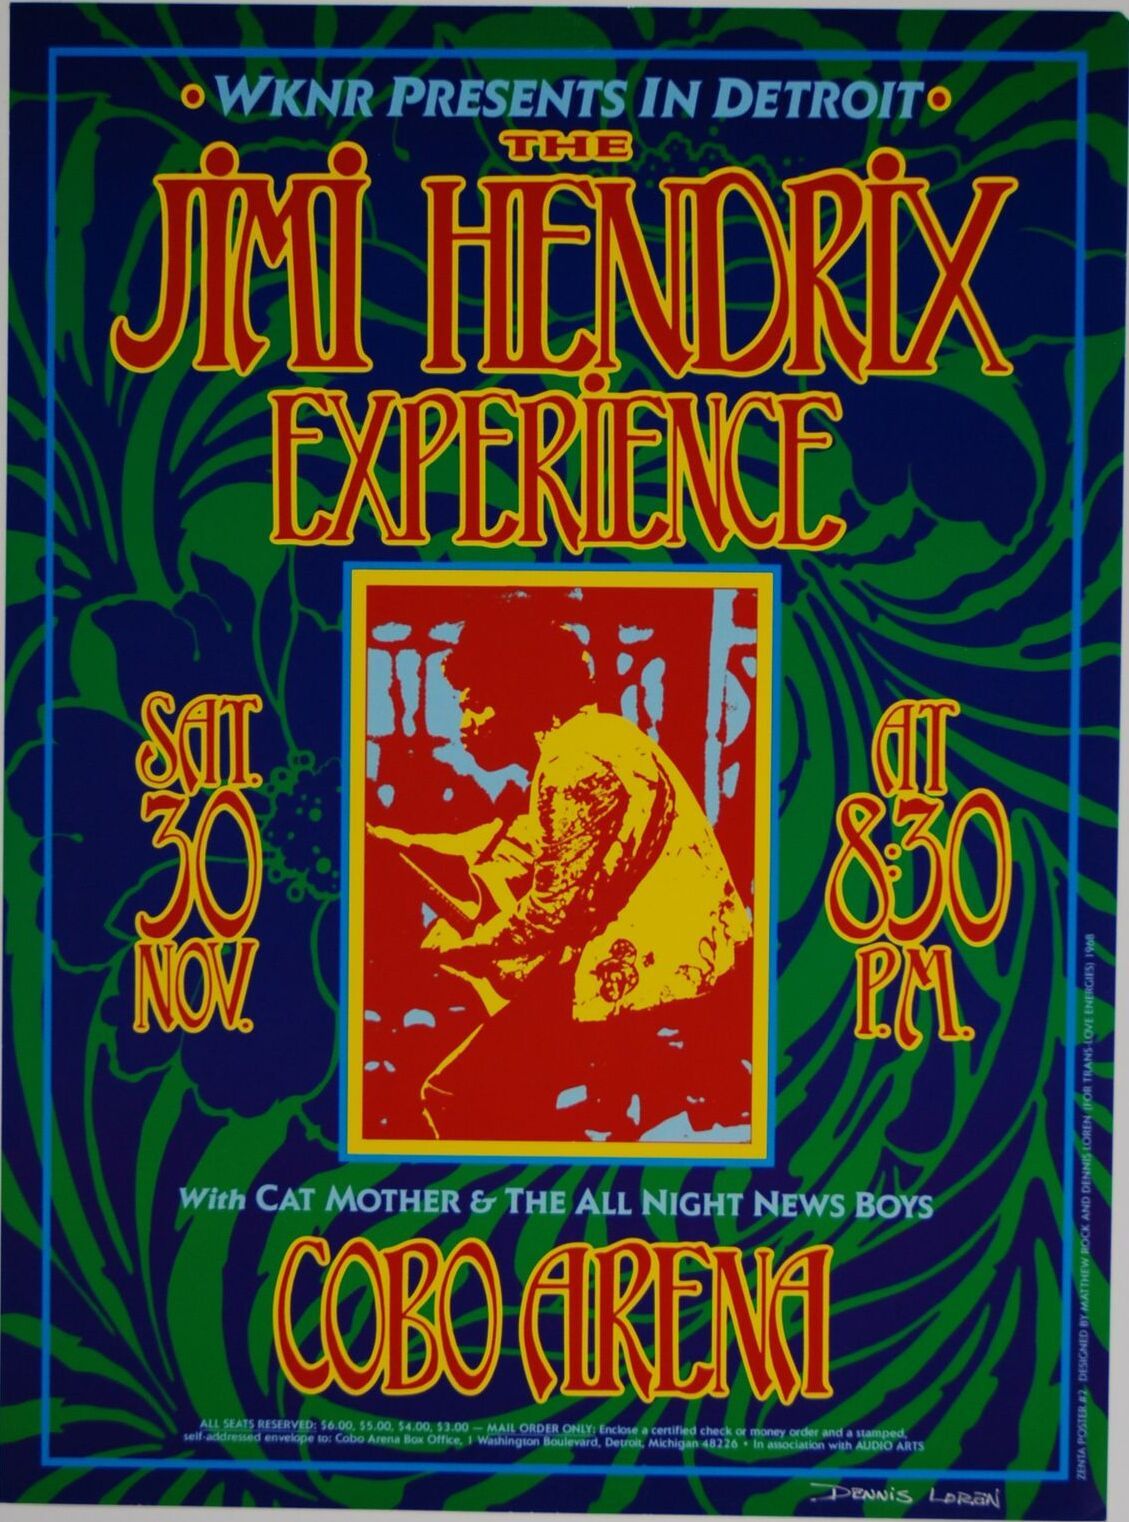 1999-Cobo Arena-Jimi Hendrix Experience-RP-2 Concert Poster